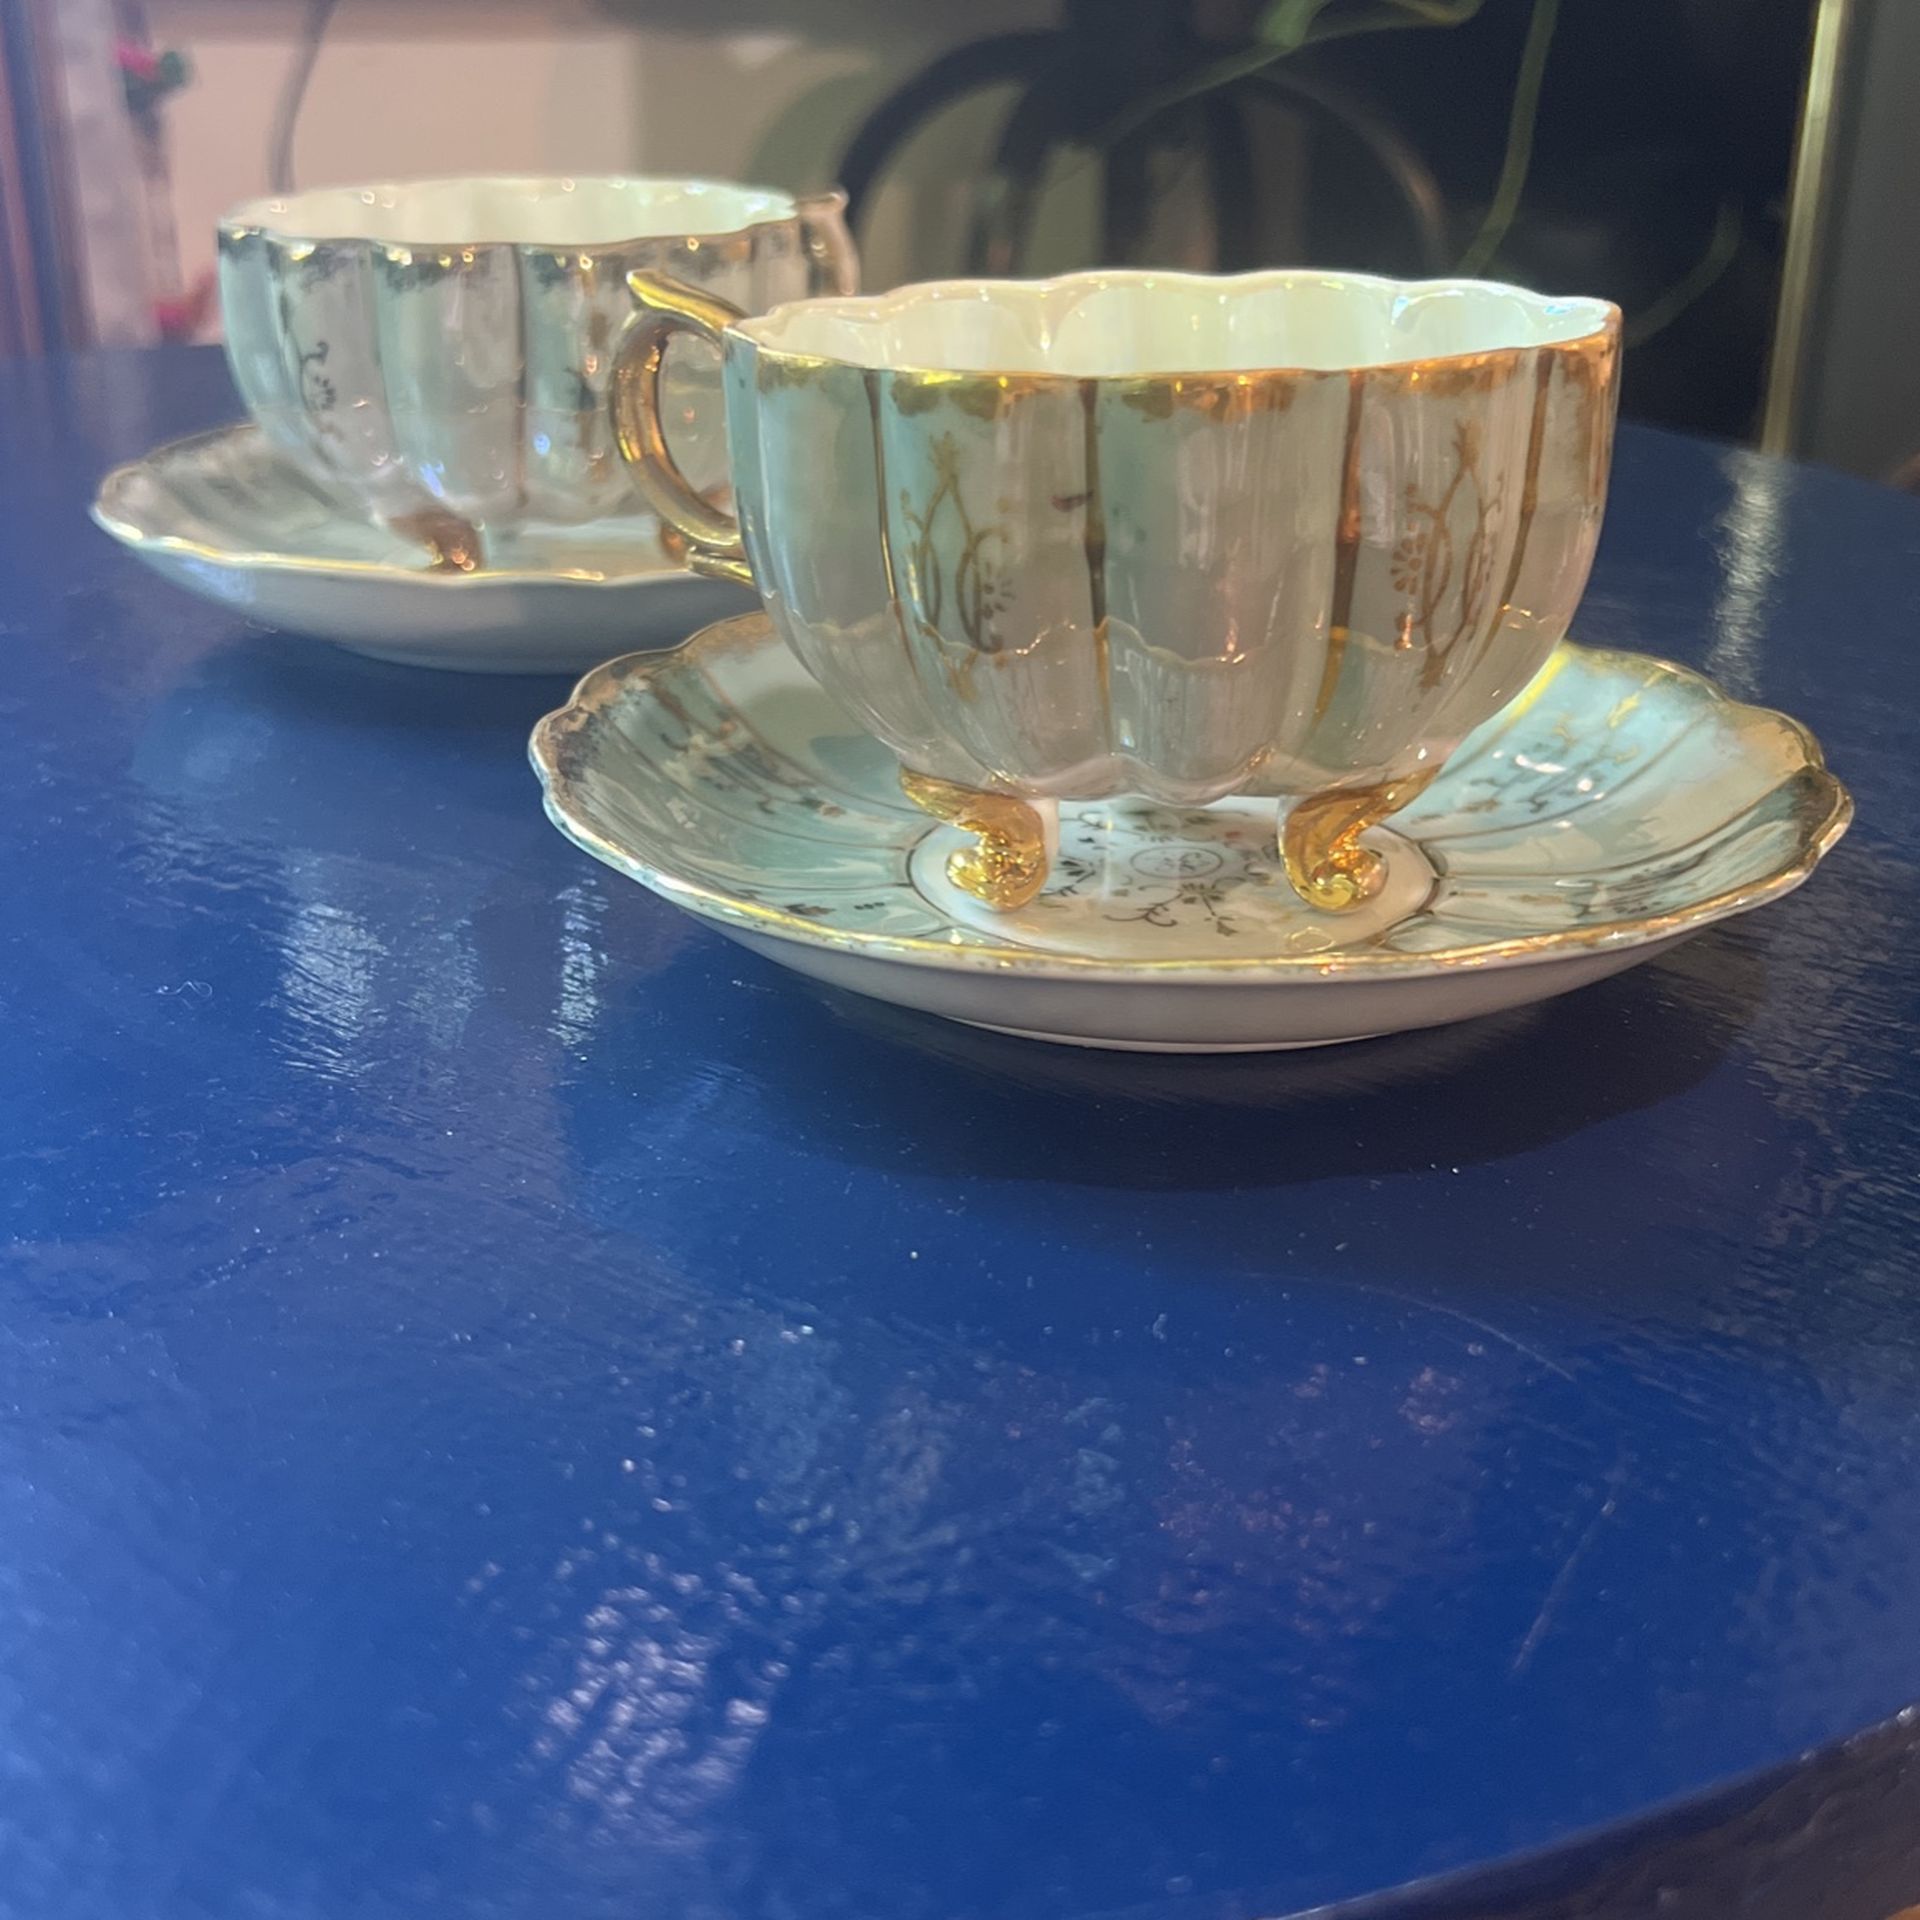  Vintage Pedestal Tea Cup And Saucer China Translucent Japan $30